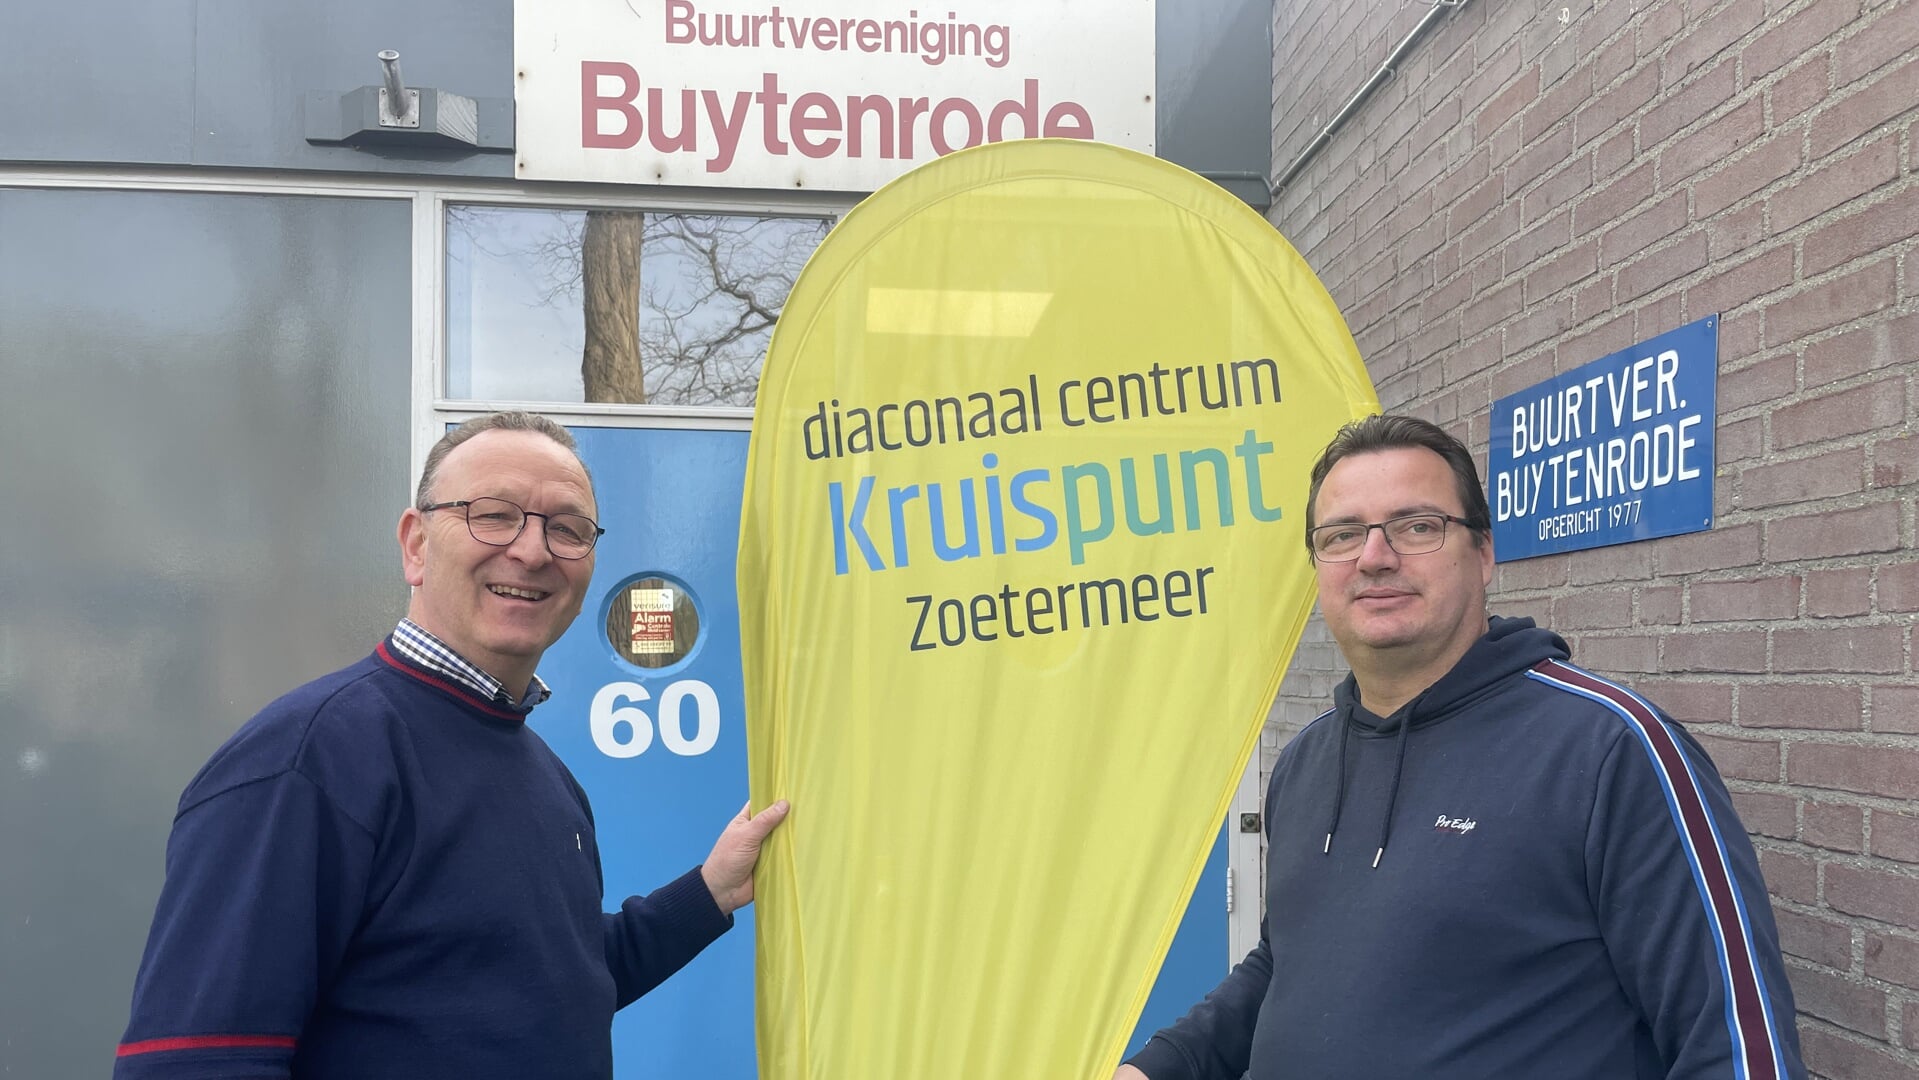 Ronald van Berkel en Johan Roest, initiatiefnemers van Diaconaal Centrum Kruispunt in Buytenwegh. Foto: pr